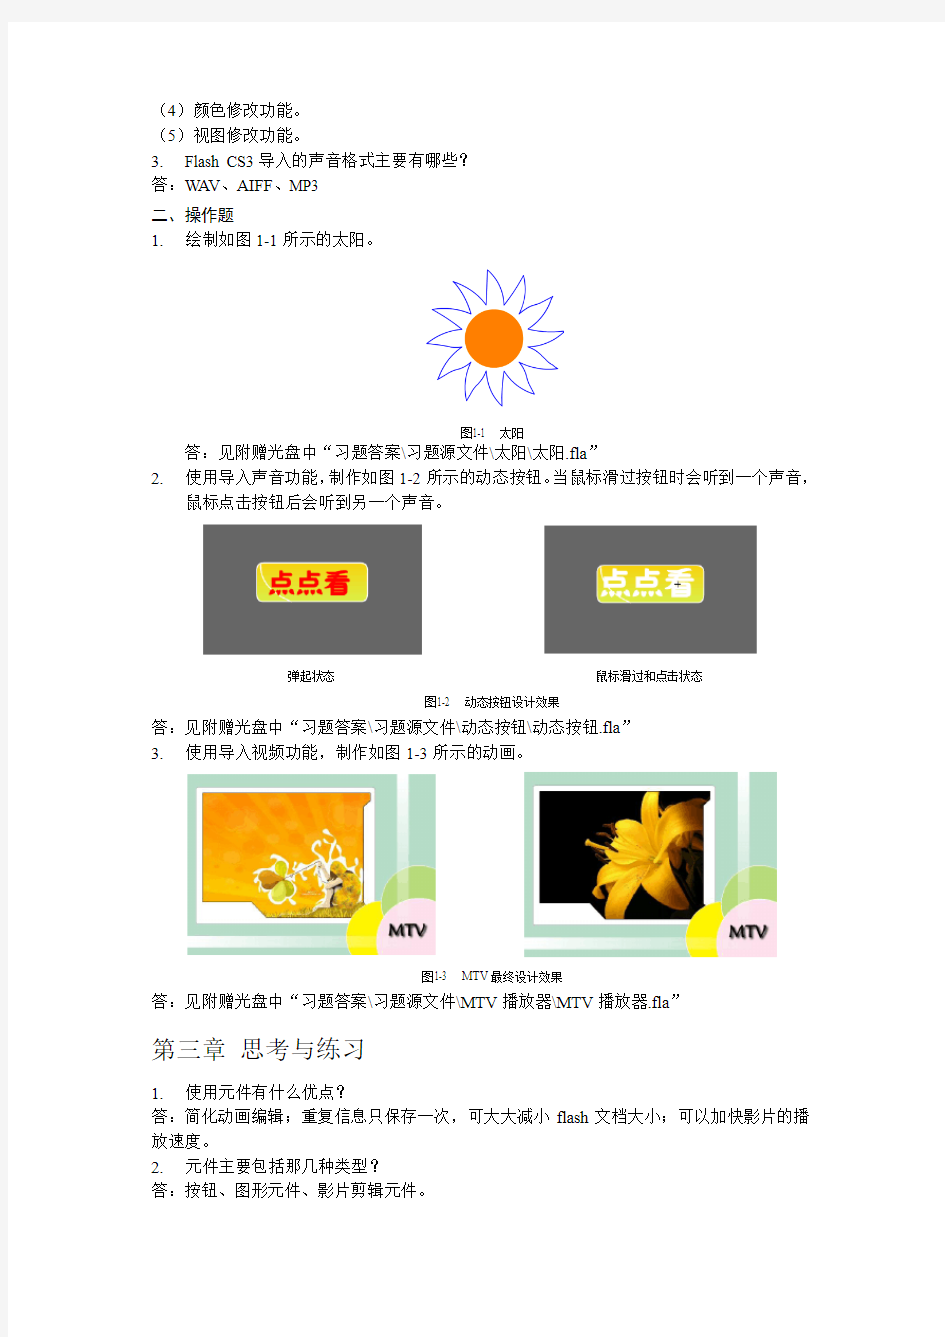 Flash CS3中文版动画制作基础习题答案